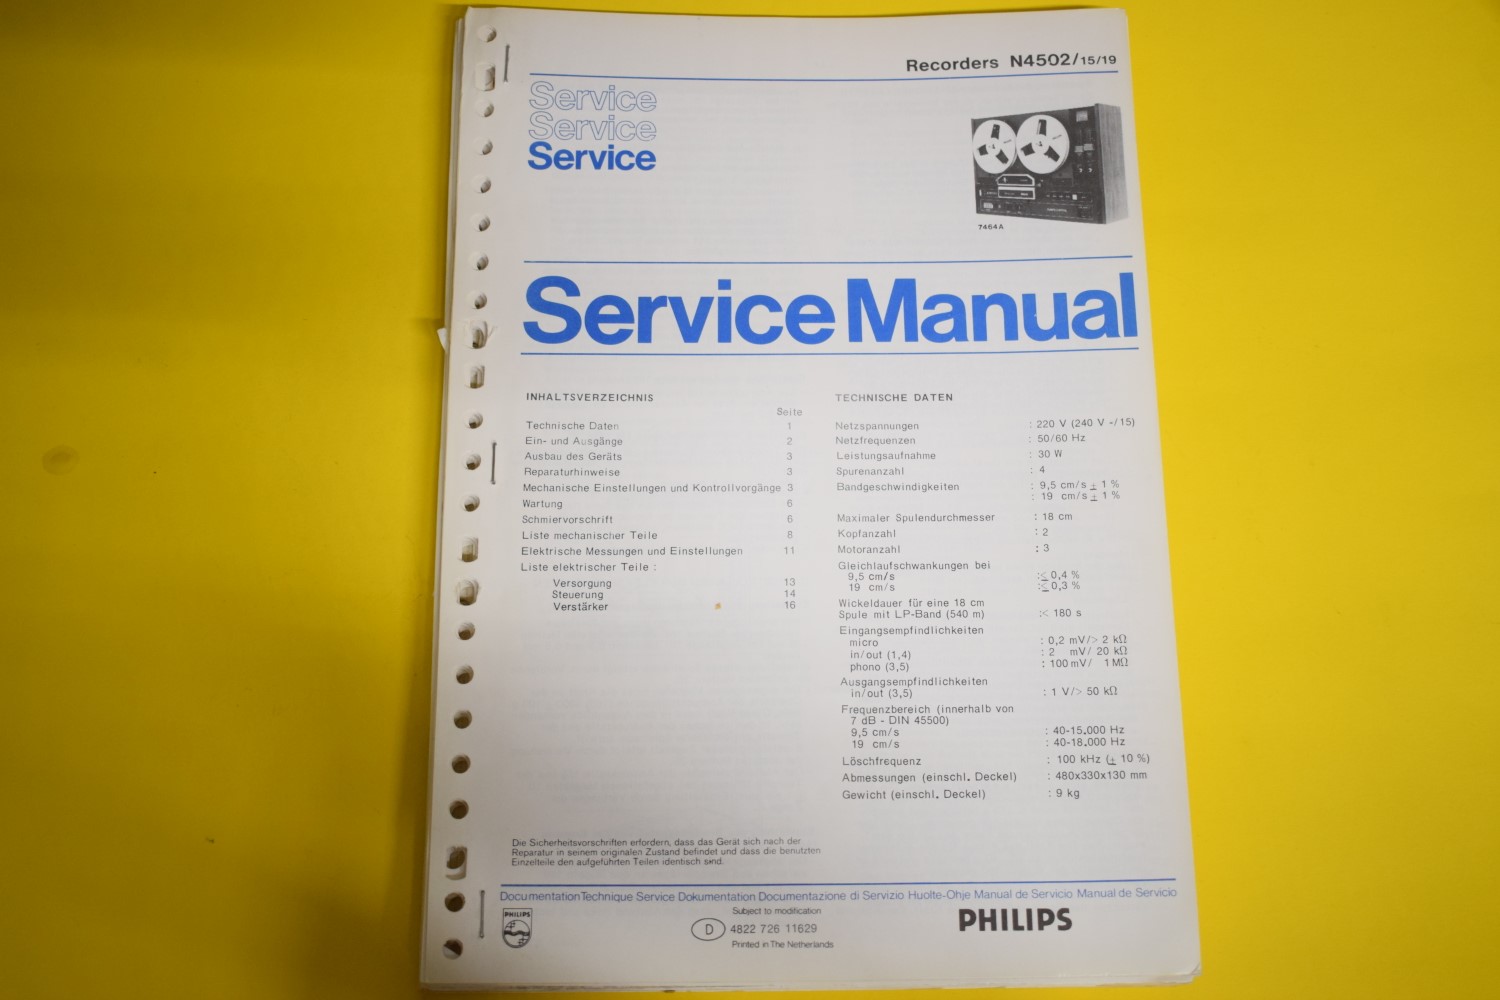 Philips N4502 Tape Recorder Service Manual – German